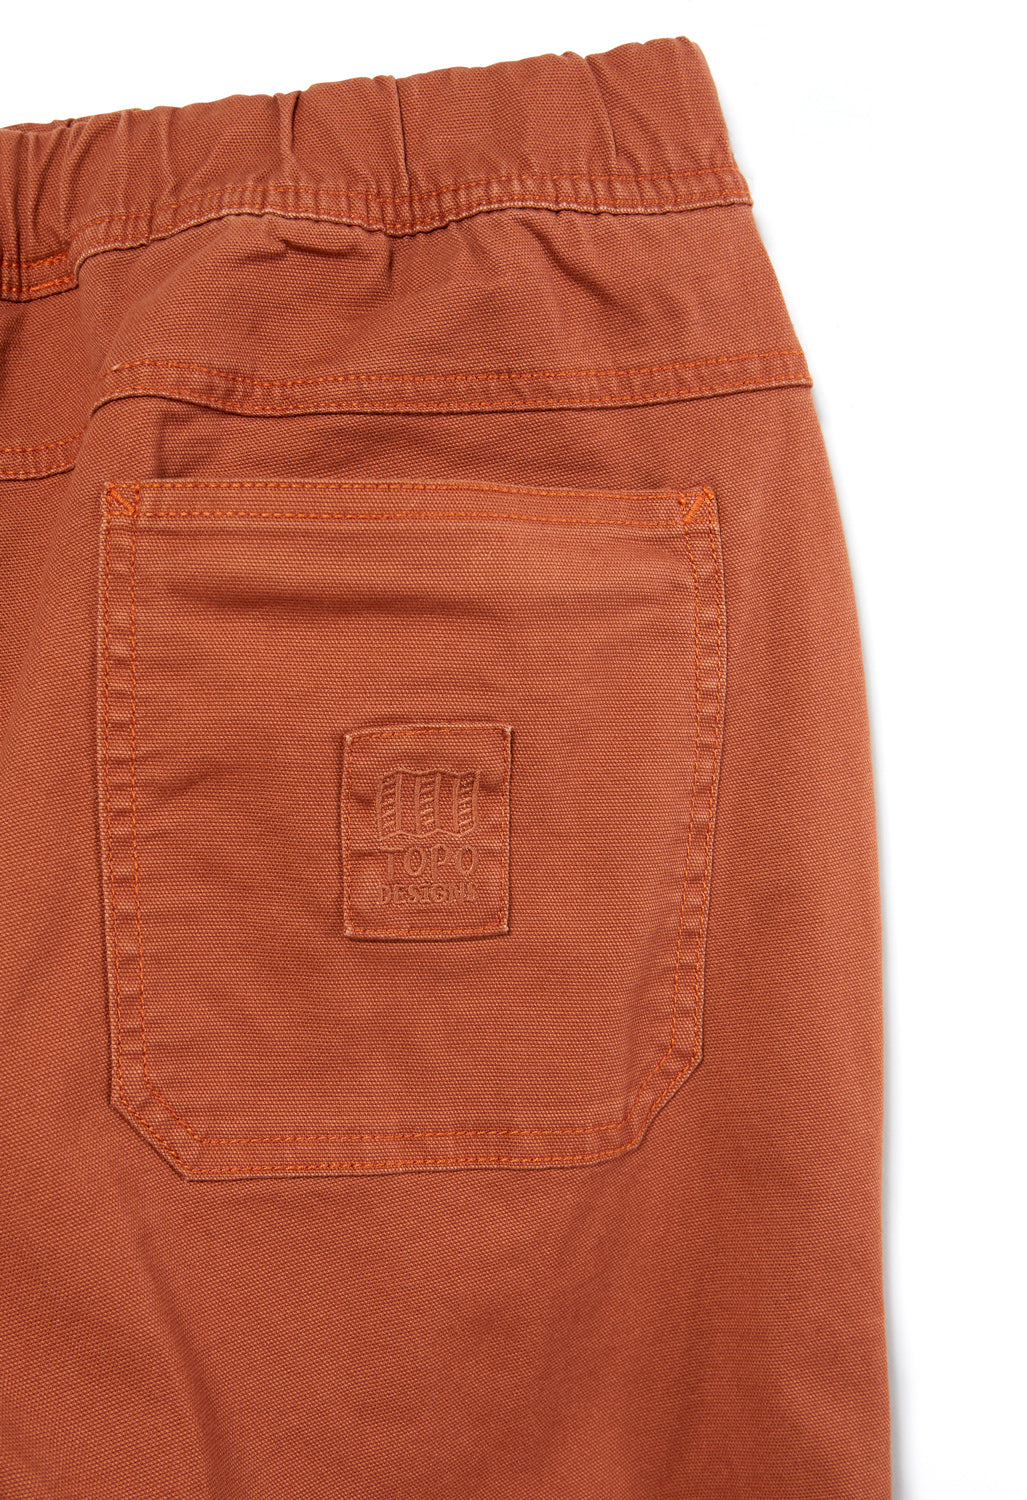 Topo Designs Men's Dirt Pants - Brick